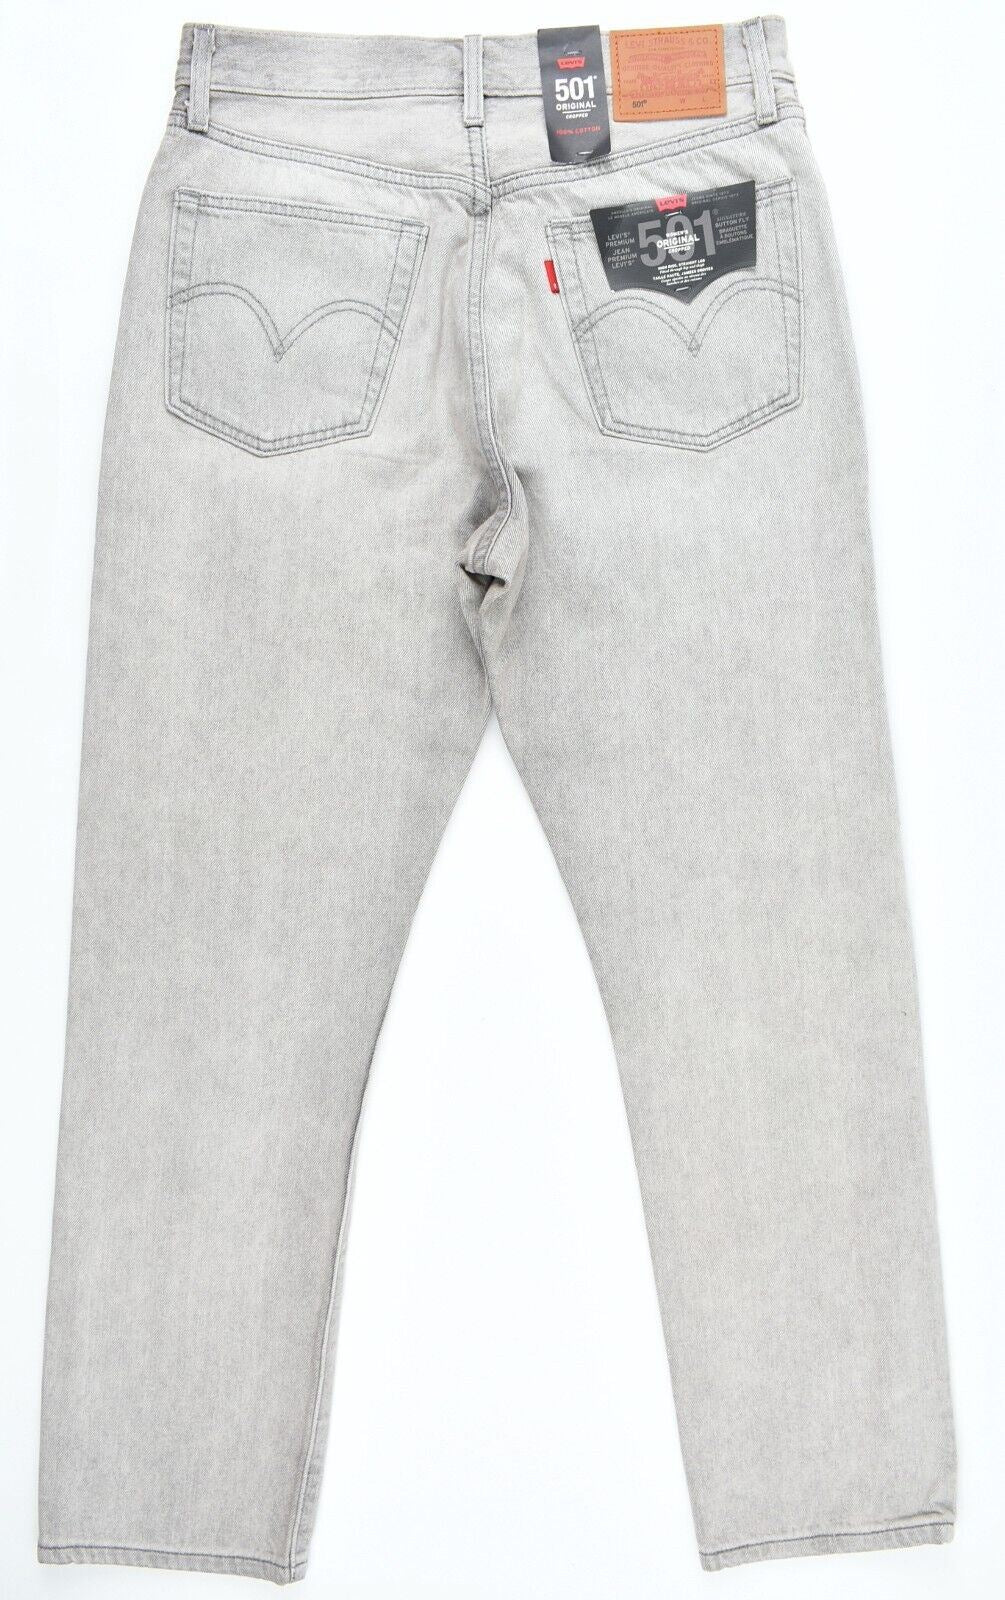 LEVI'S 501 Women's High Rise Straight Leg Cropped Jeans, Grey, size W28 L28